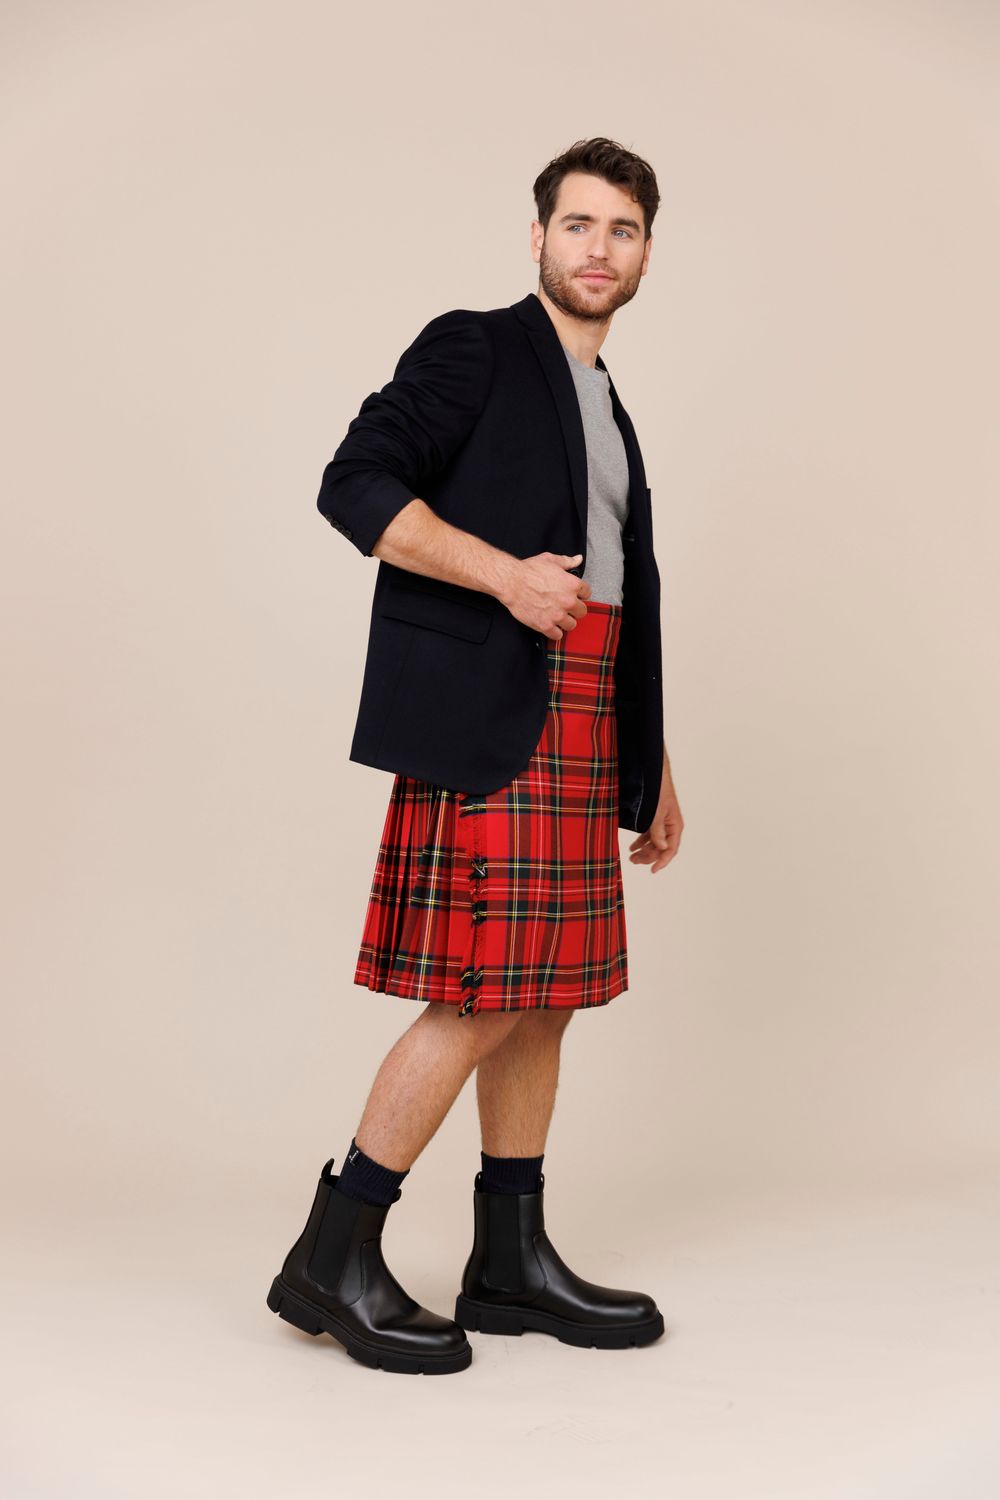 Comprar Stewart Dress Men's Tartan Kilt - Kilts para Hombre 017